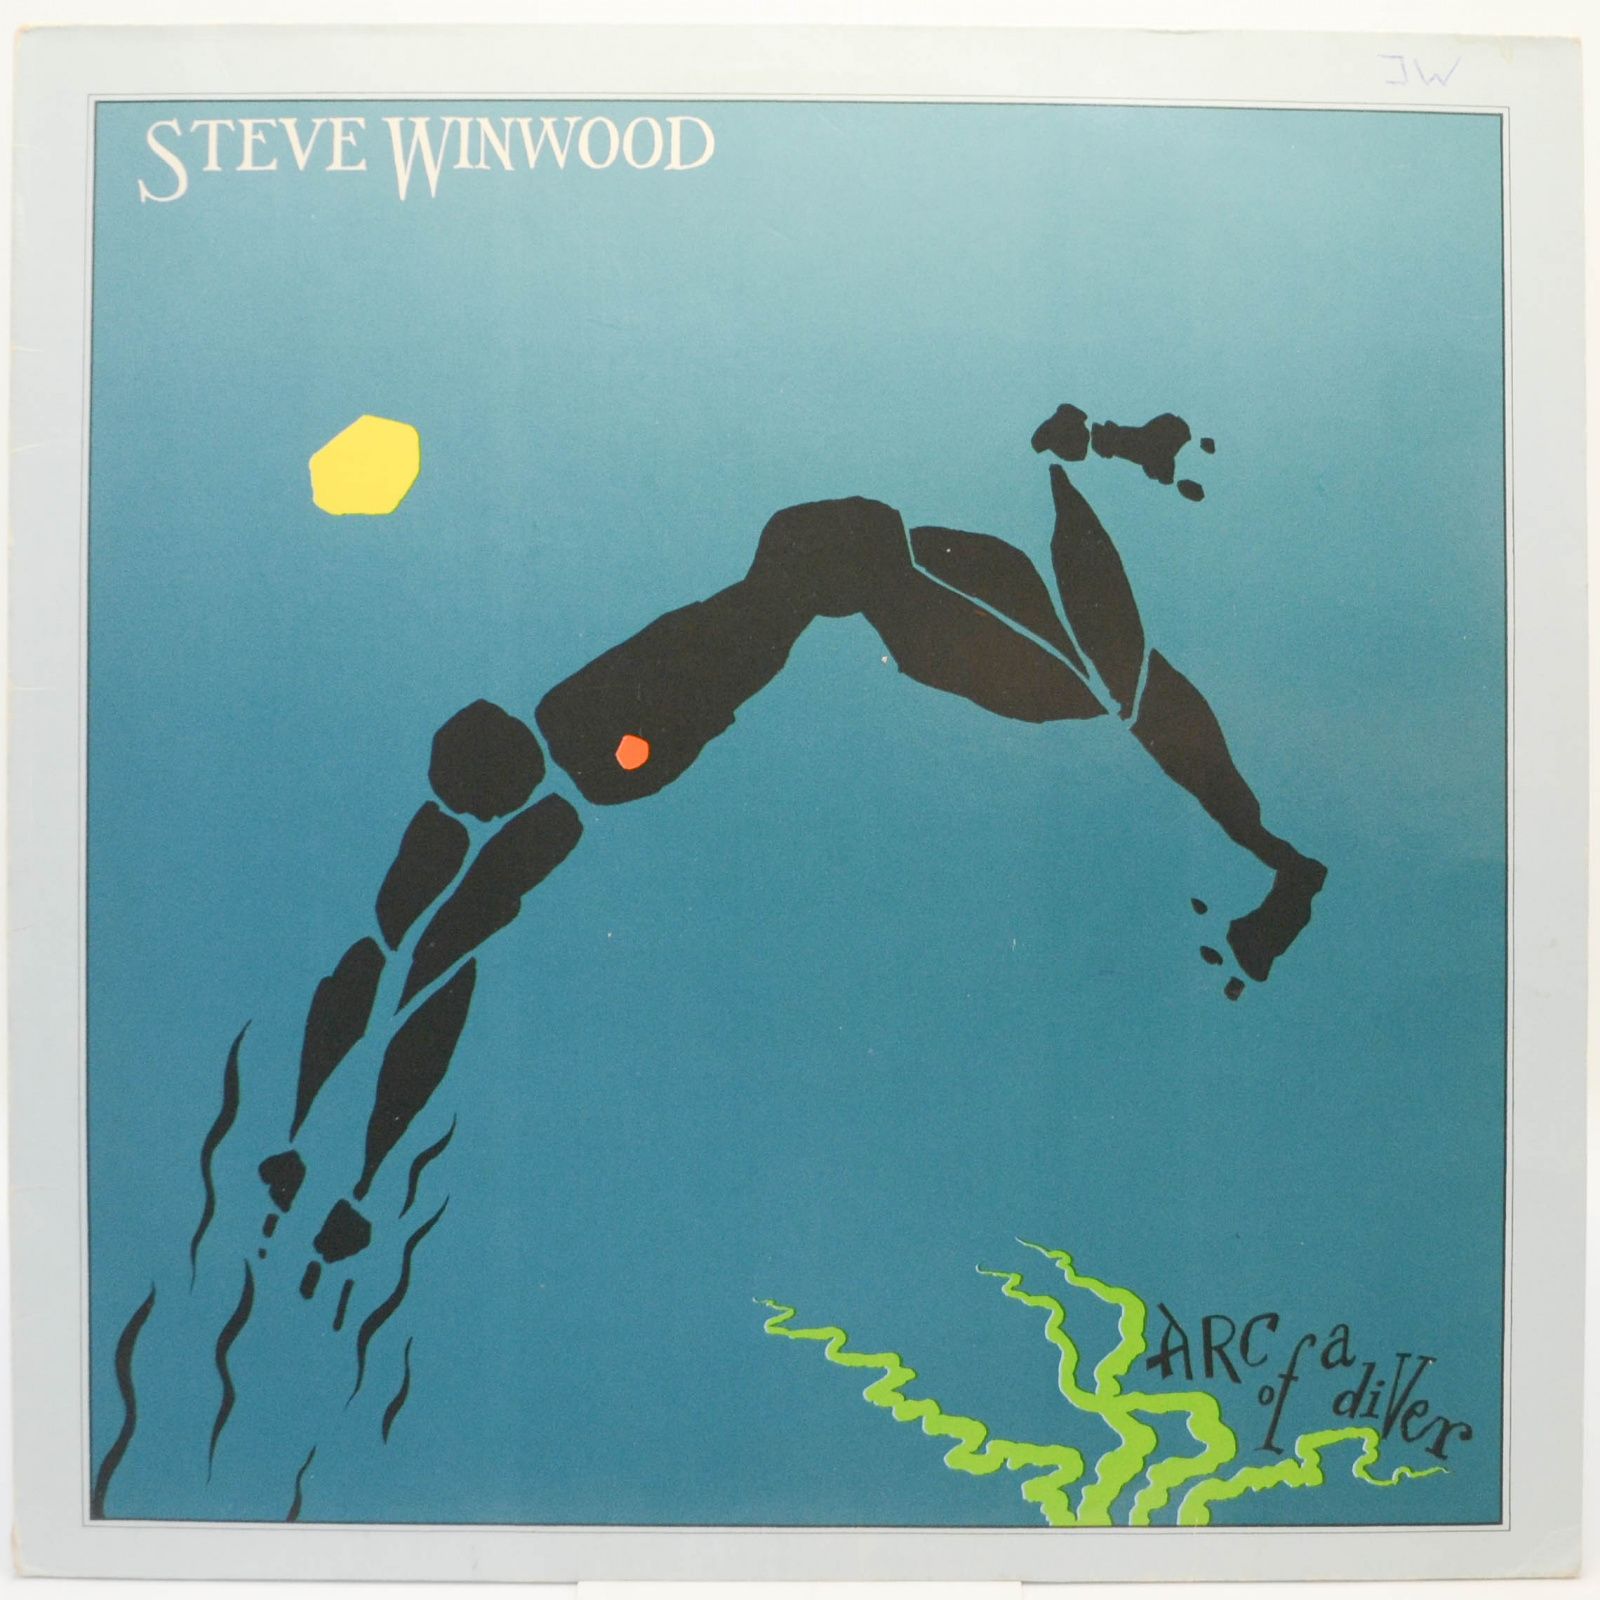 Steve Winwood — Arc Of A Diver, 1980